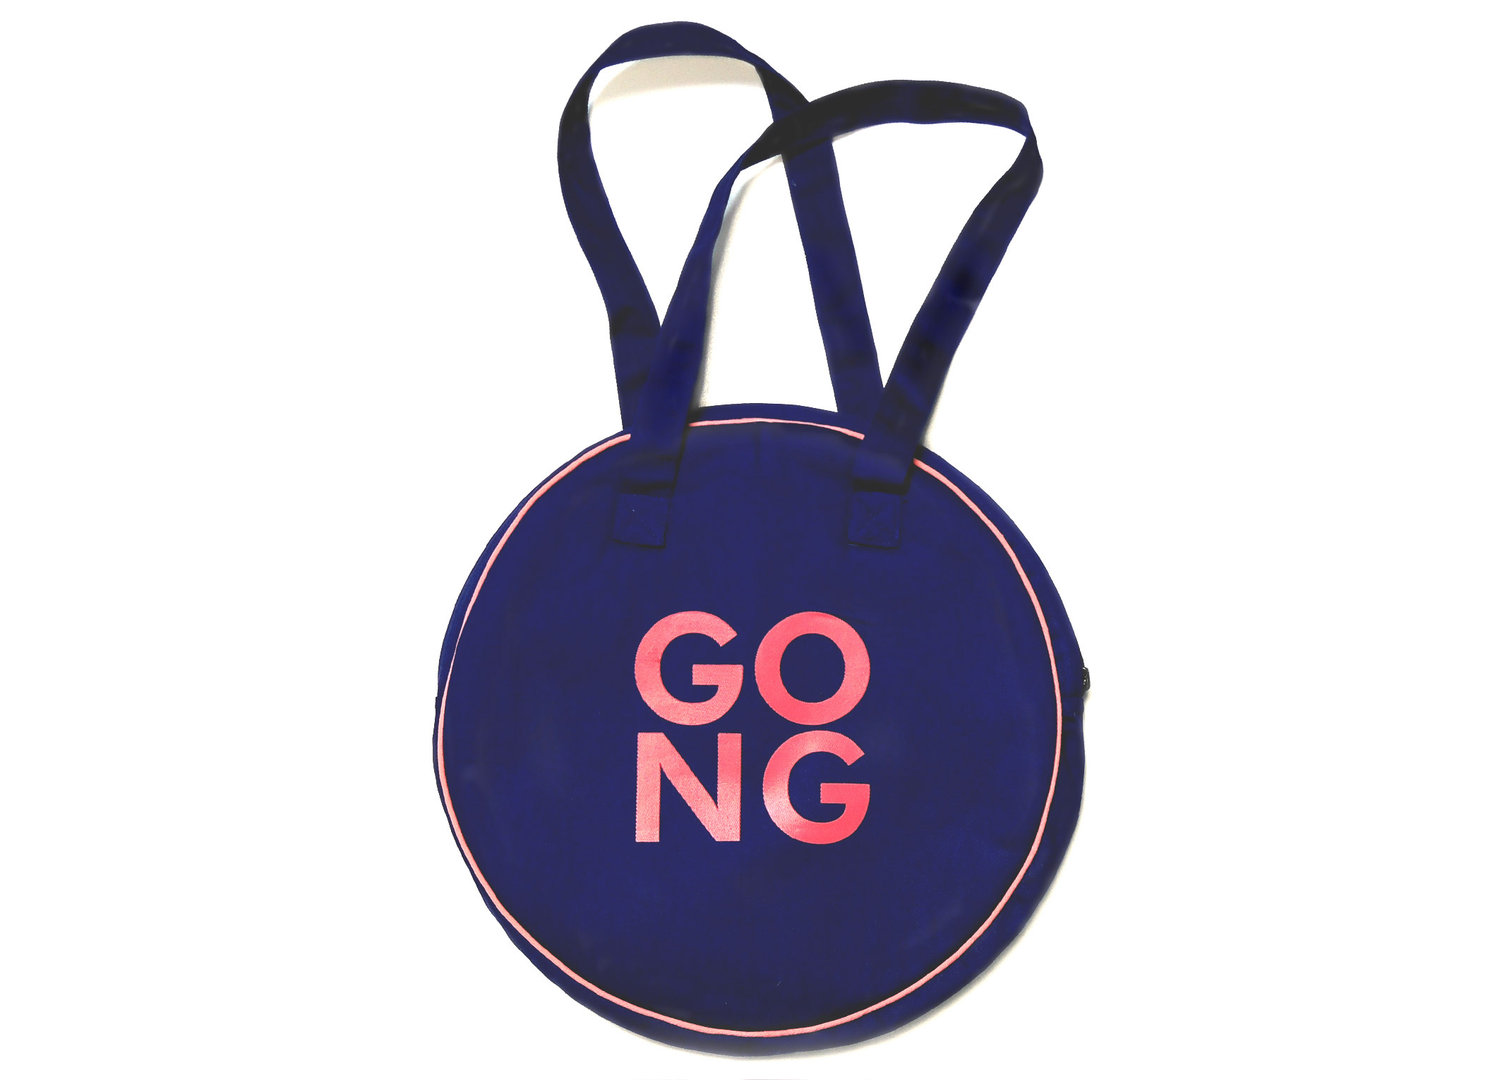 blaue Gongtasche mit pinkem 'GONG' Aufdruck